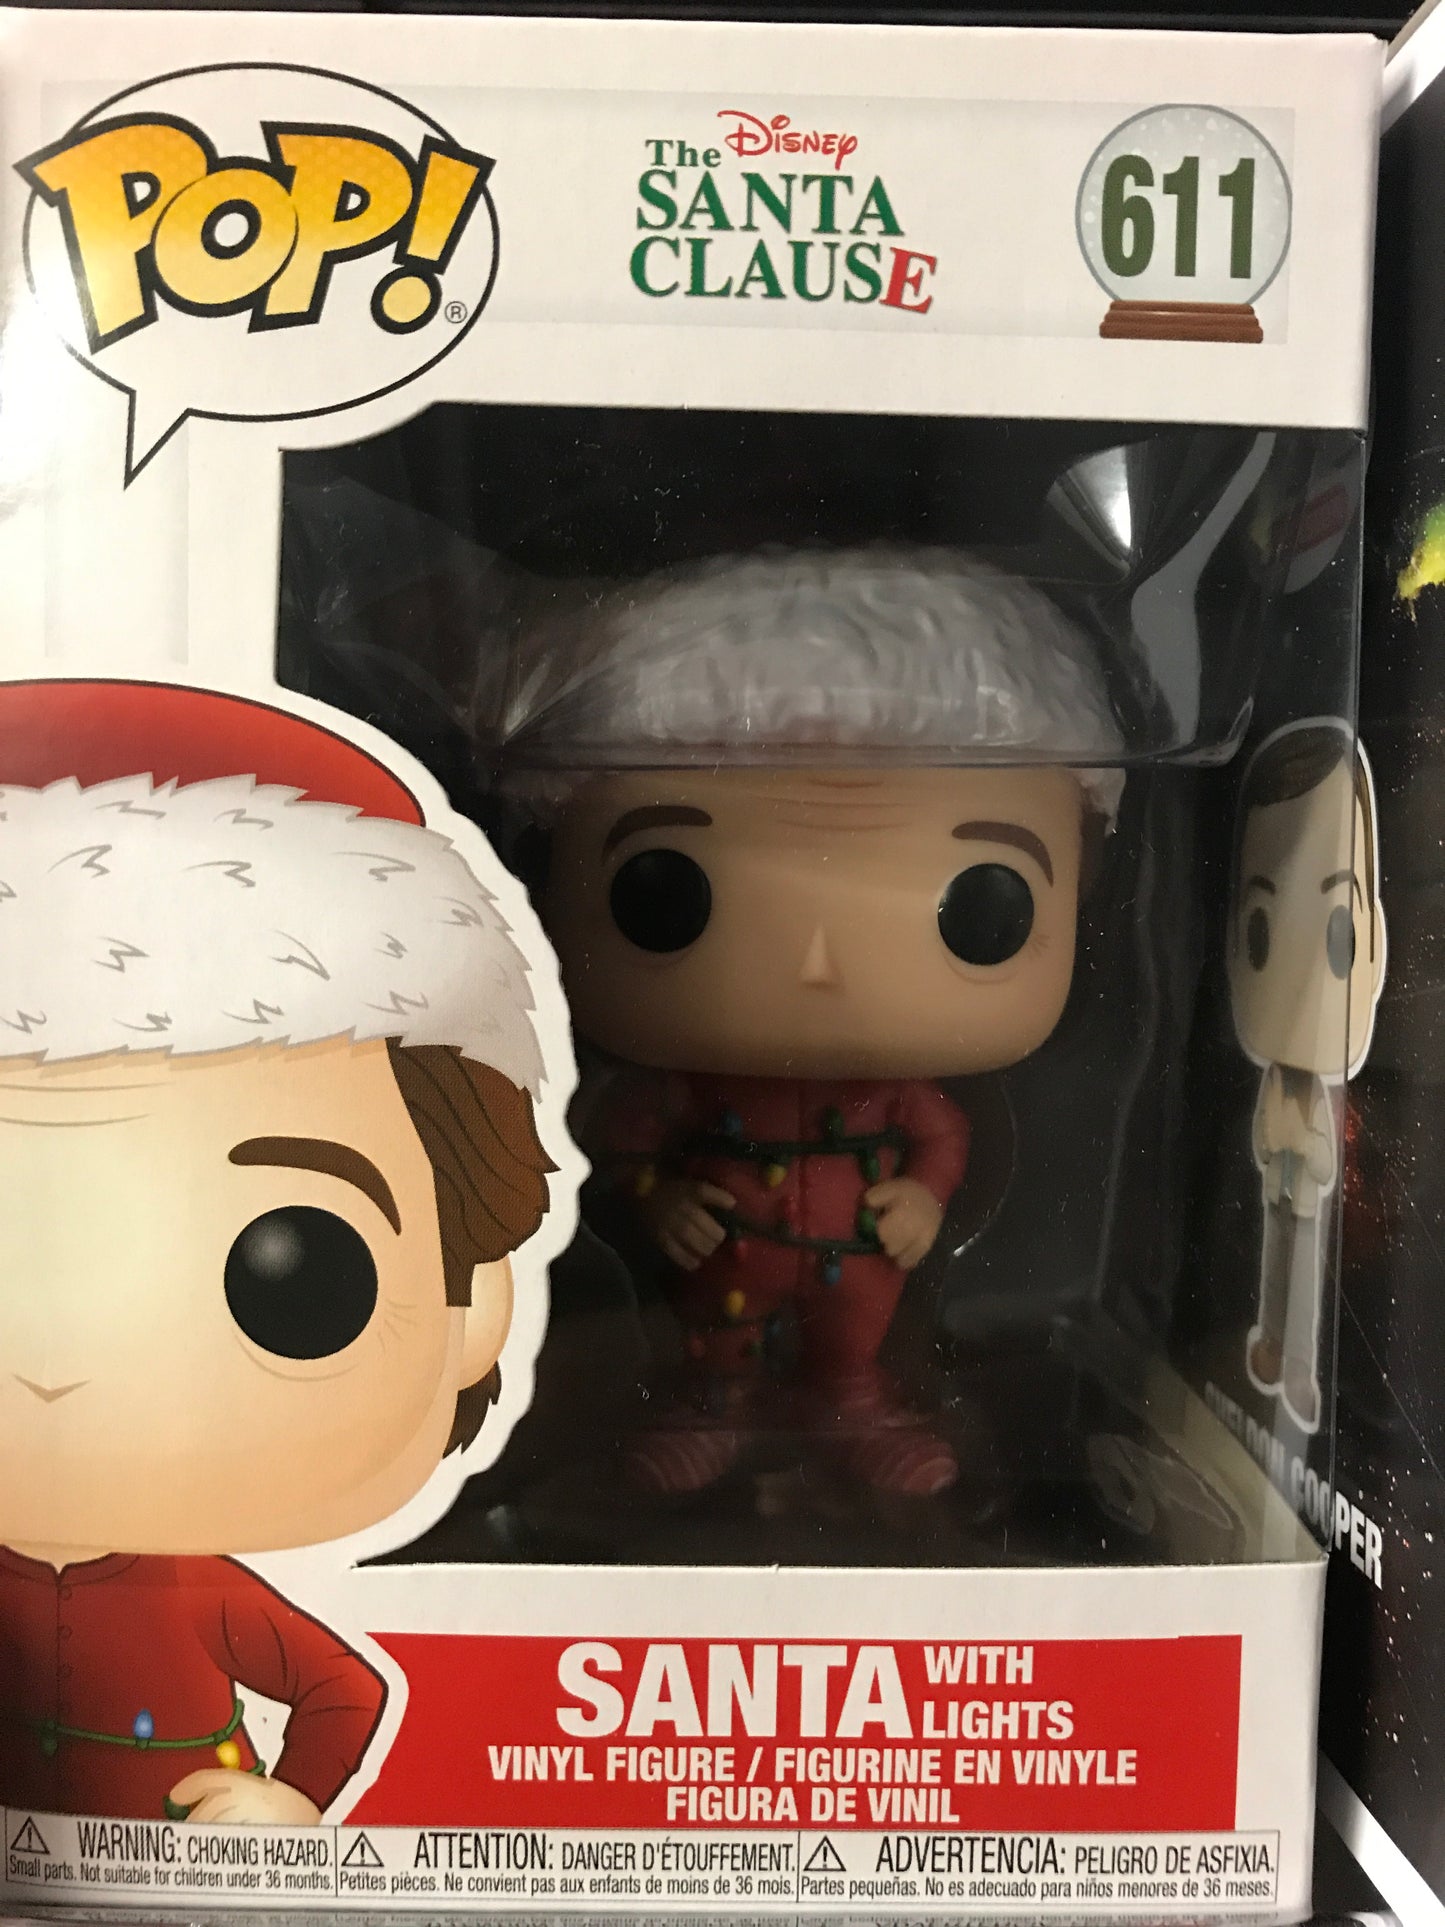 Santa Clause with lights 611 Tim Allen Funko Pop! Vinyl figure store